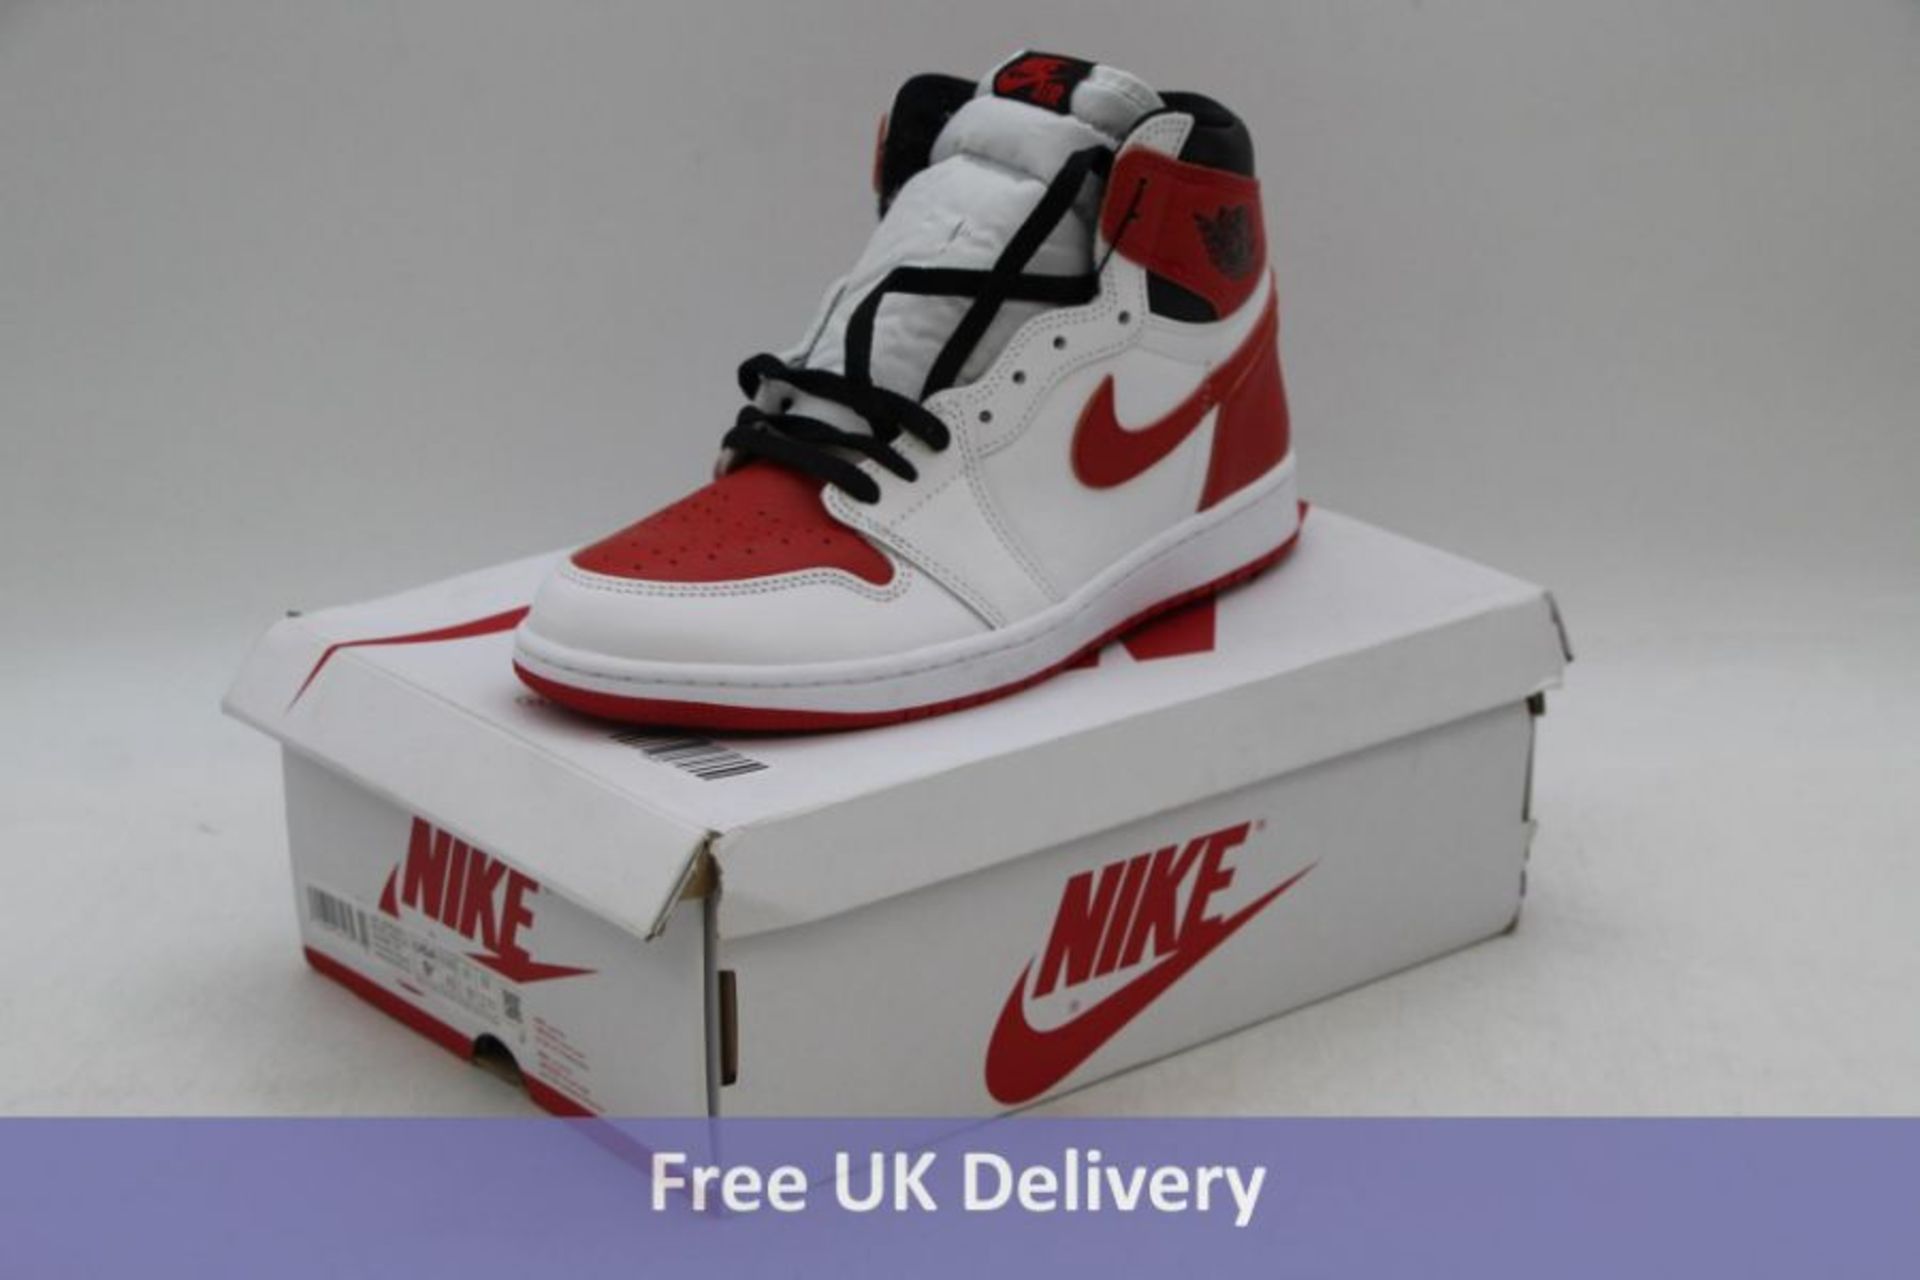 Nike Air Jordan 1 Retro High OG, White/University Red/Black, UK 8.5. Box damaged